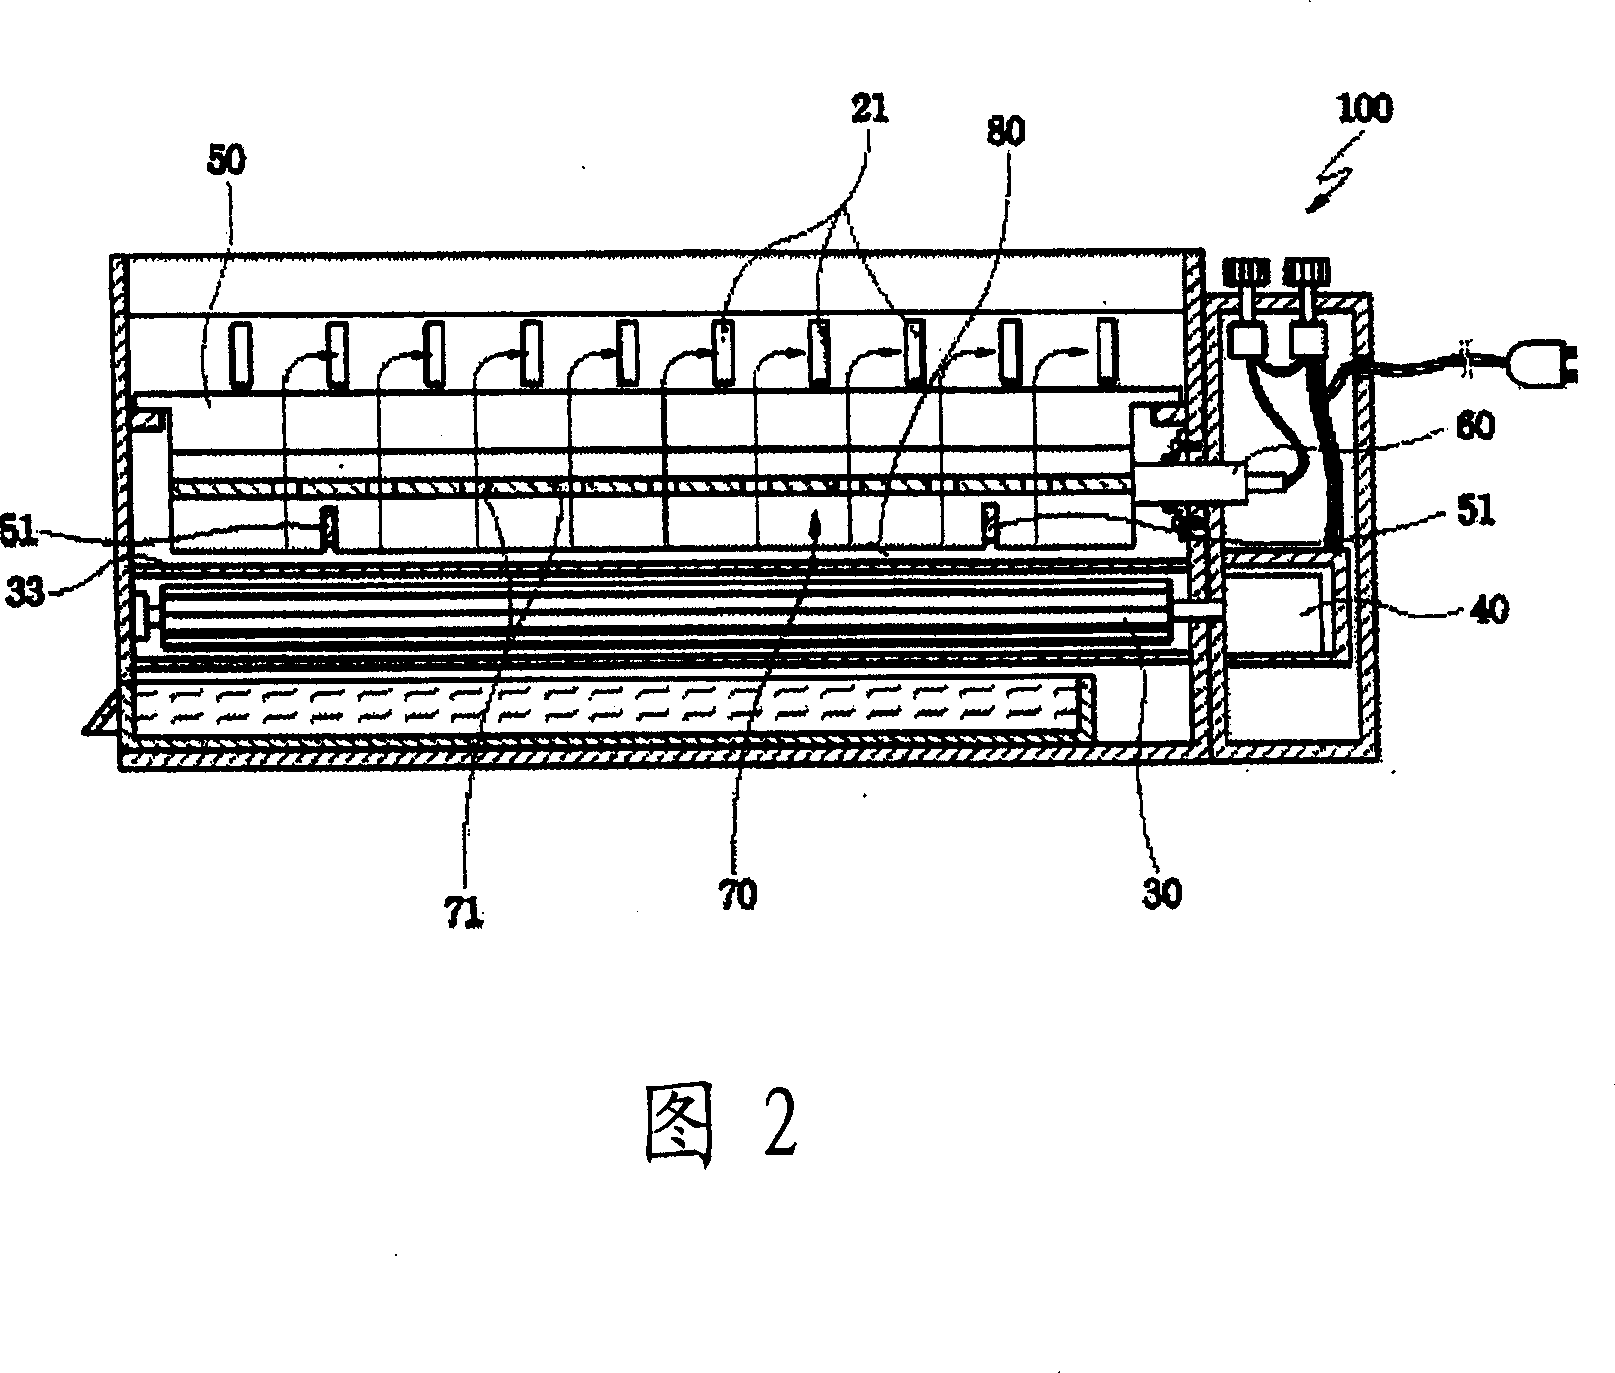 Air circulation system of roaster